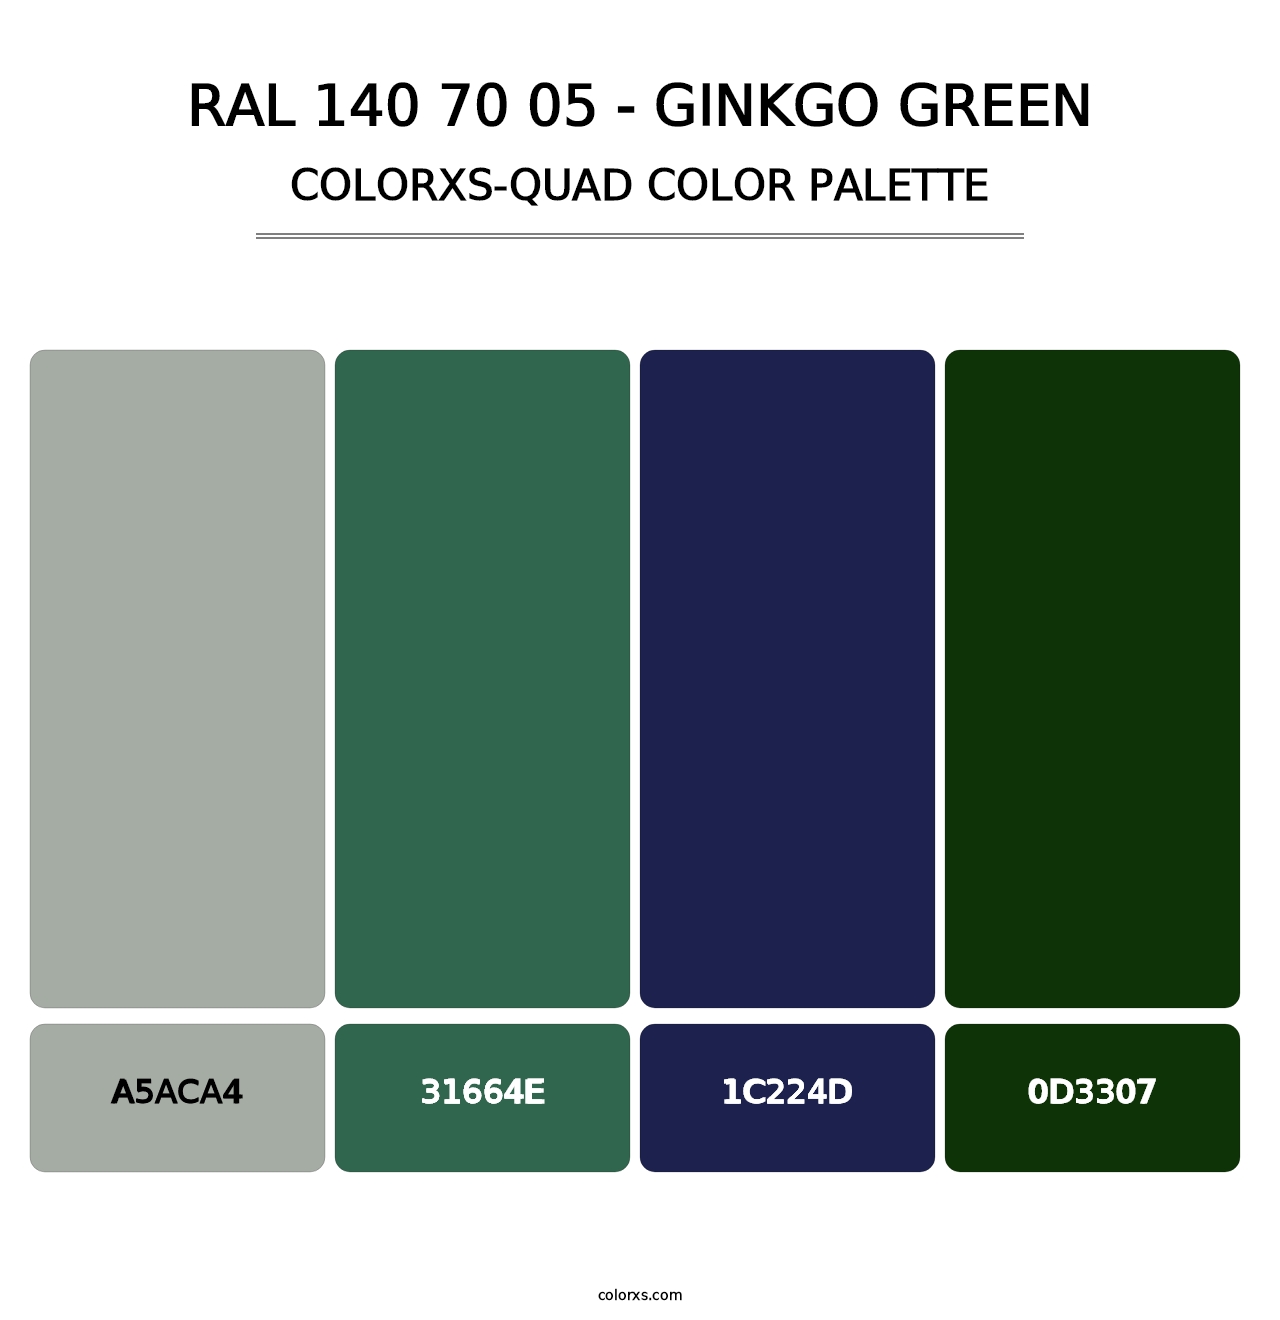 RAL 140 70 05 - Ginkgo Green - Colorxs Quad Palette